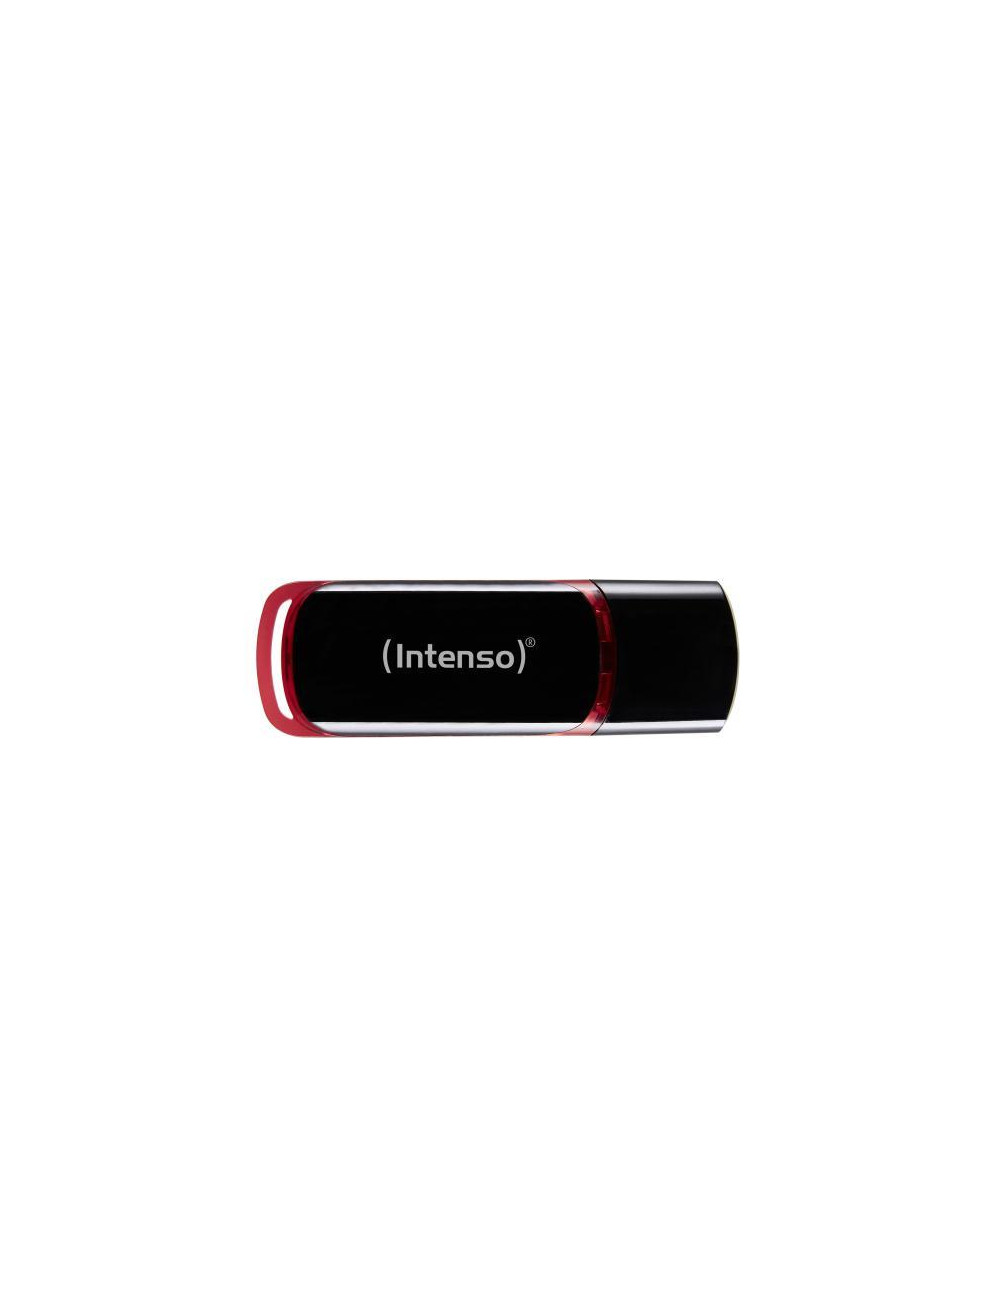 MEMORY DRIVE FLASH USB2 8GB/3511460 INTENSO